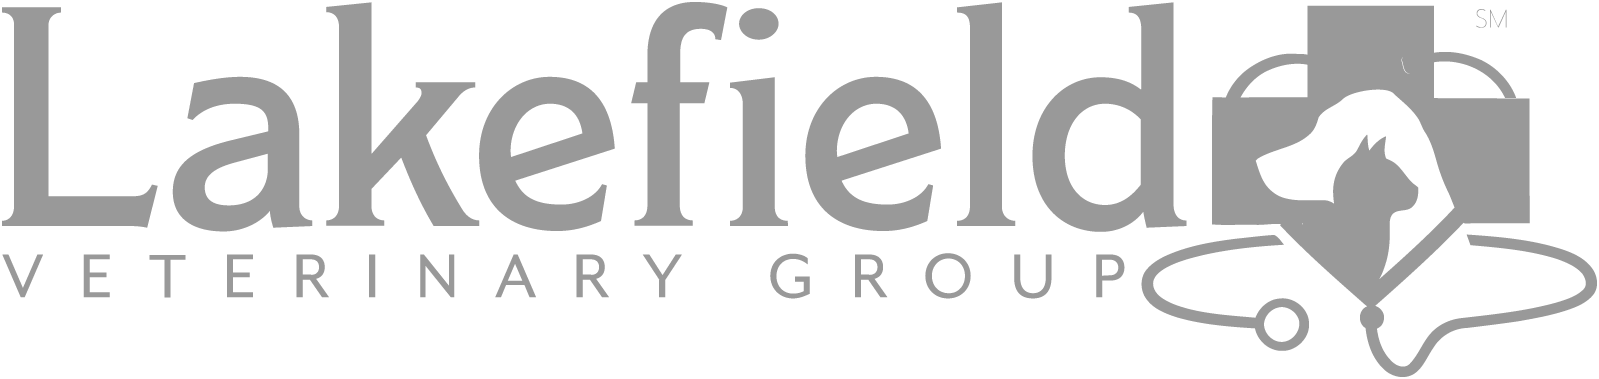 lakefield vet group logo gry